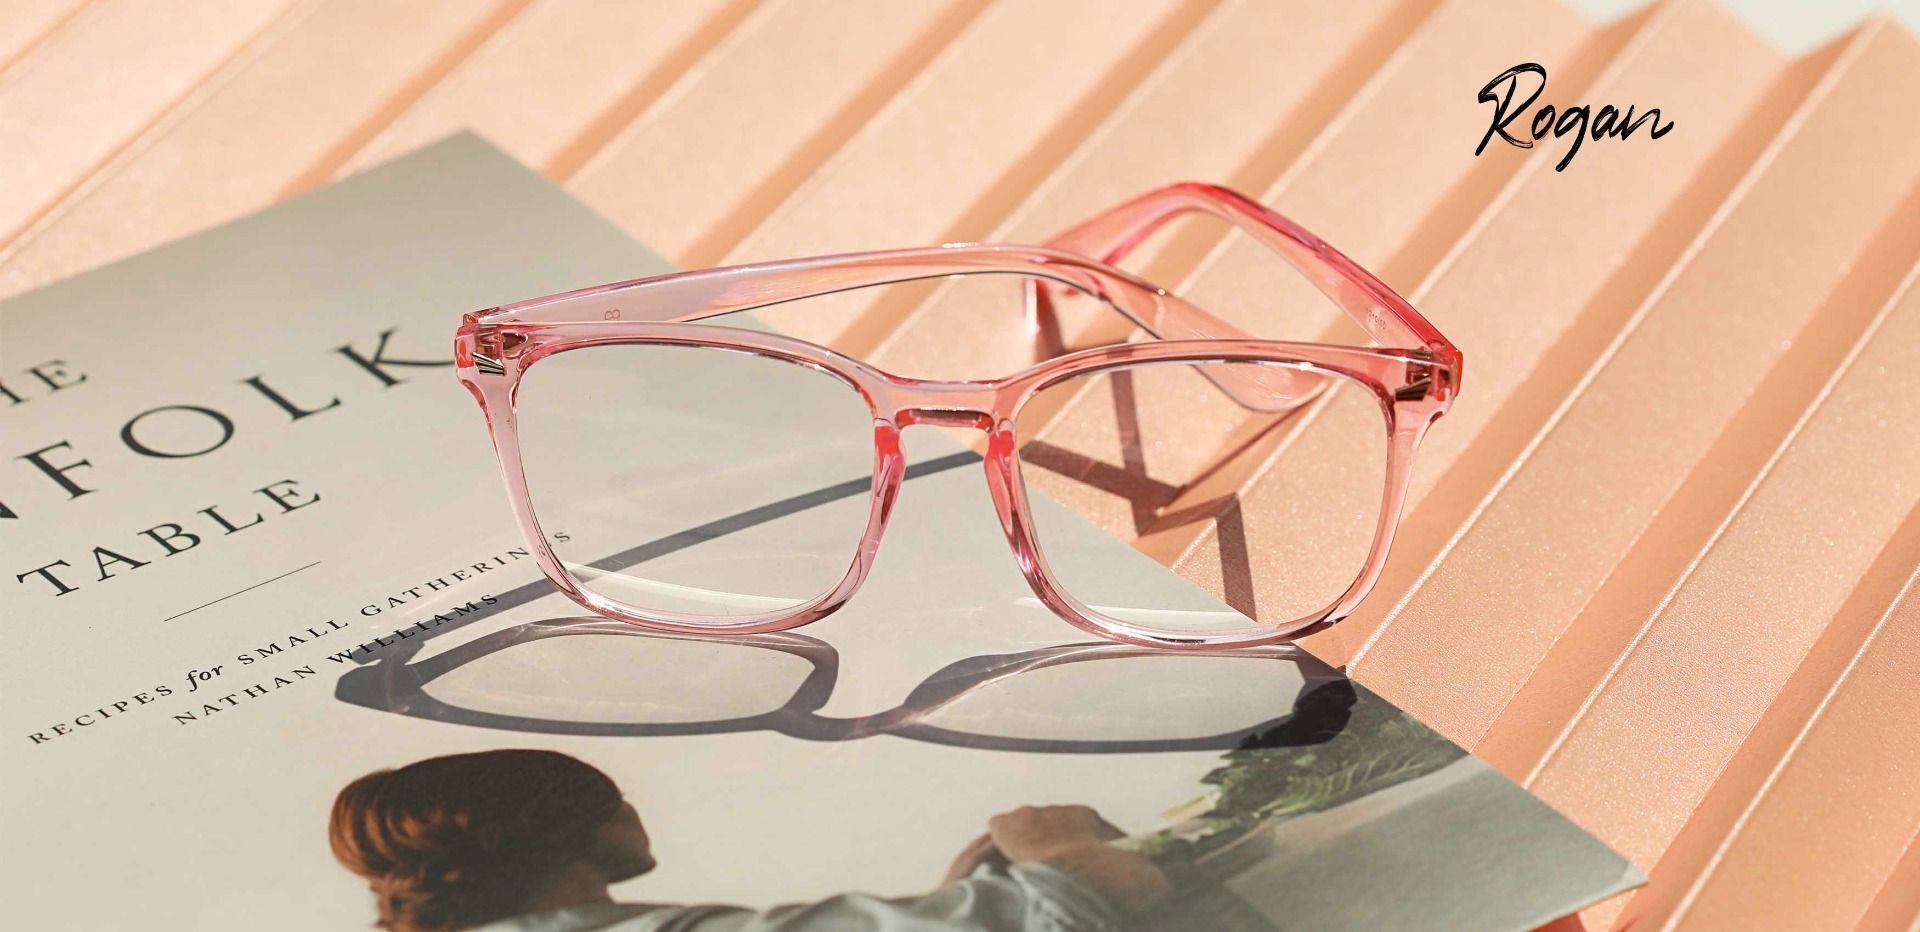 Rogan Square Prescription Glasses - Pink